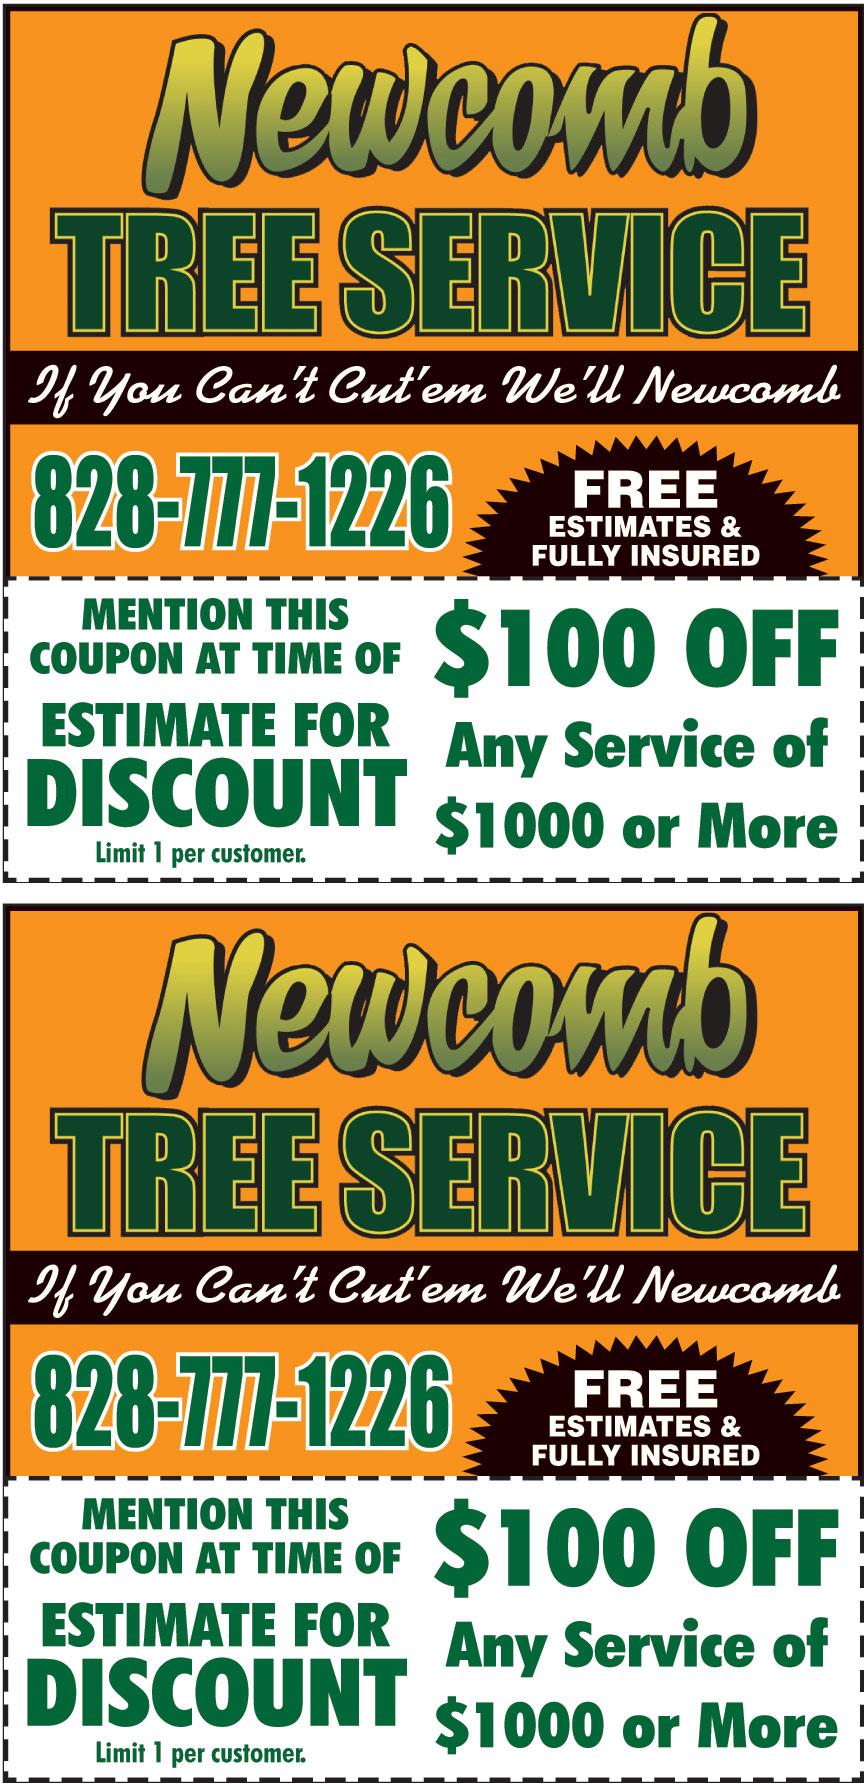 NEWCOMB TREE SERVICE